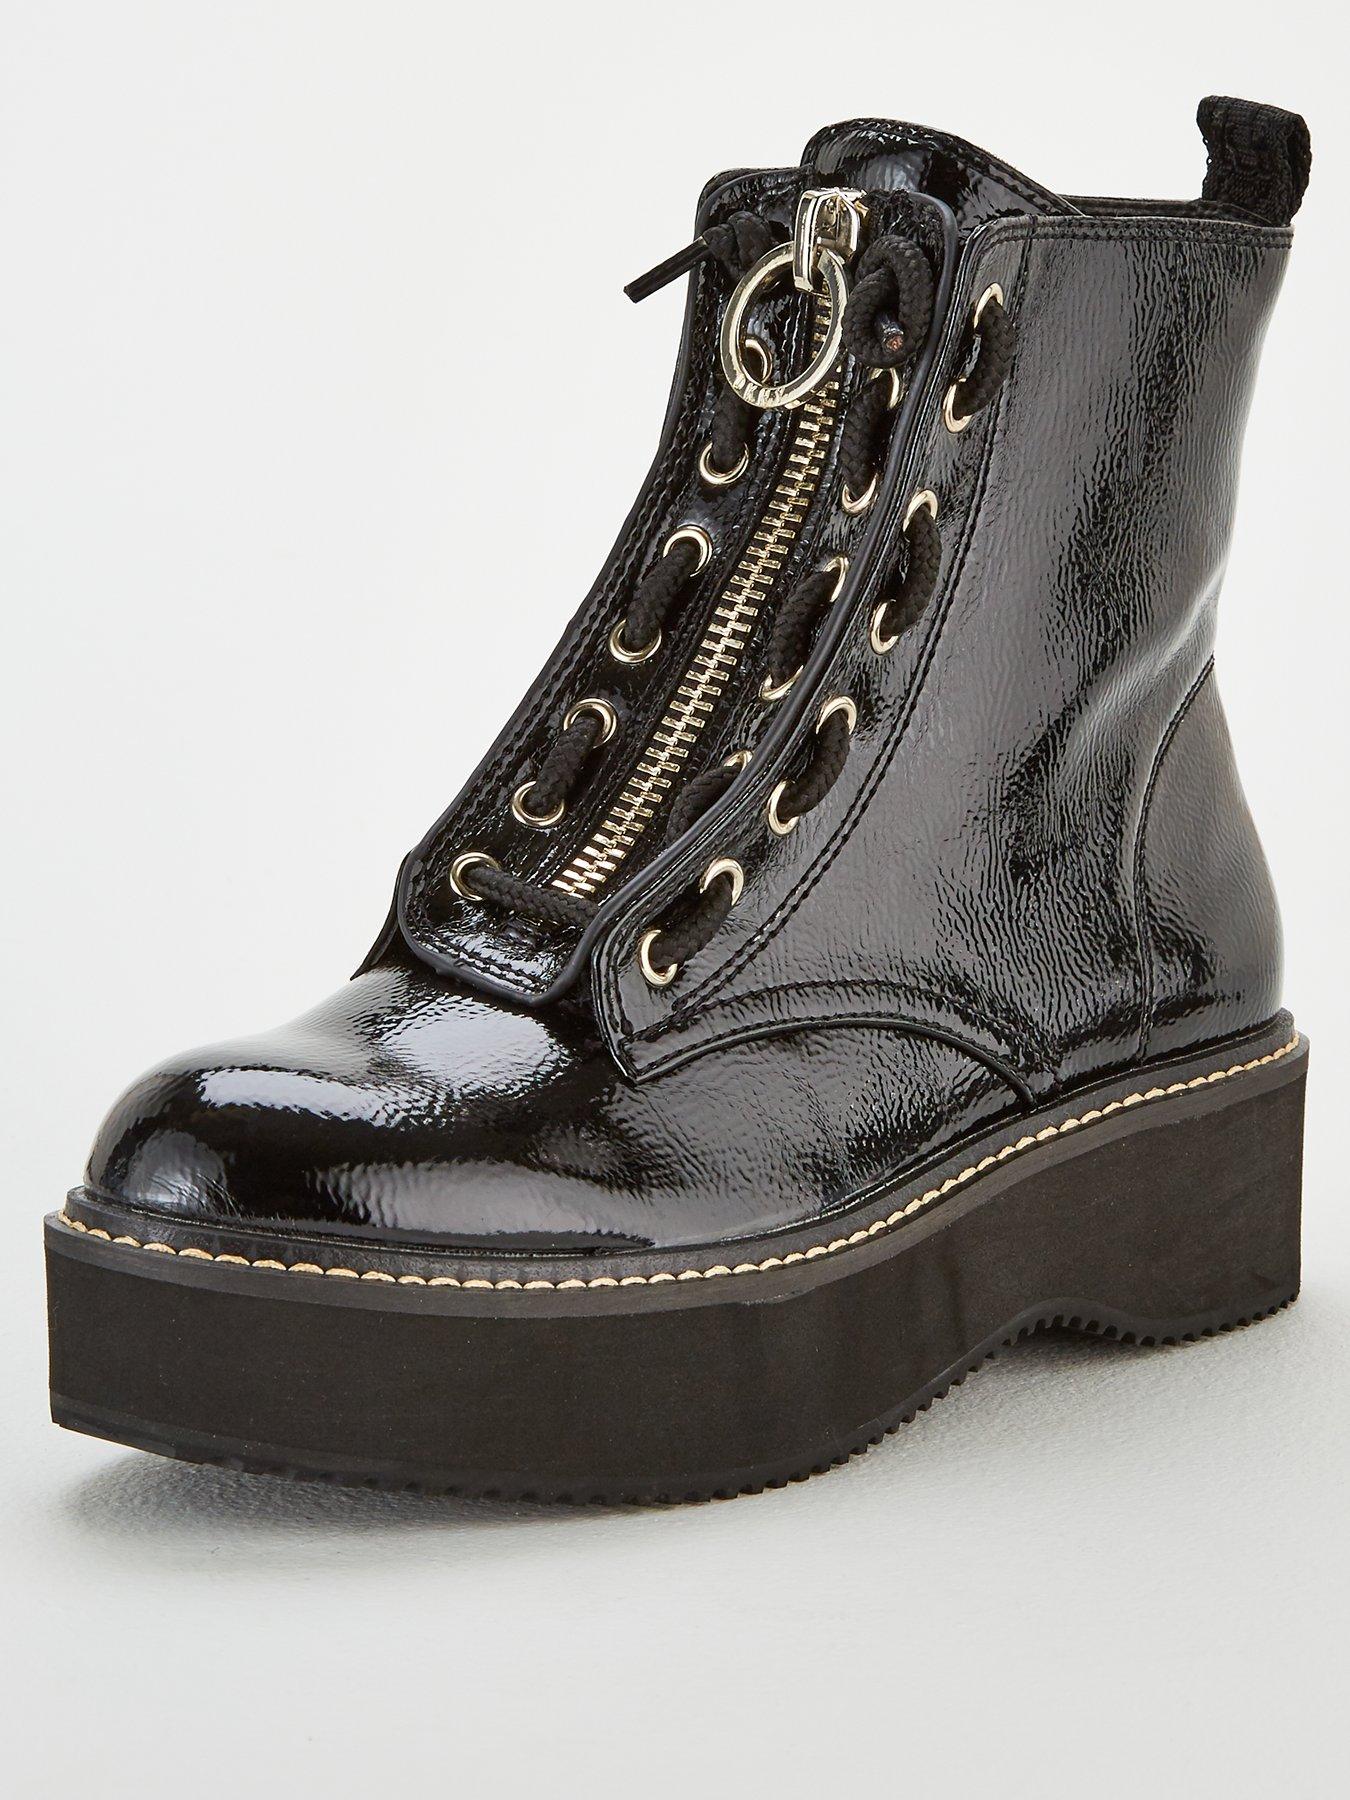 dkny boots black